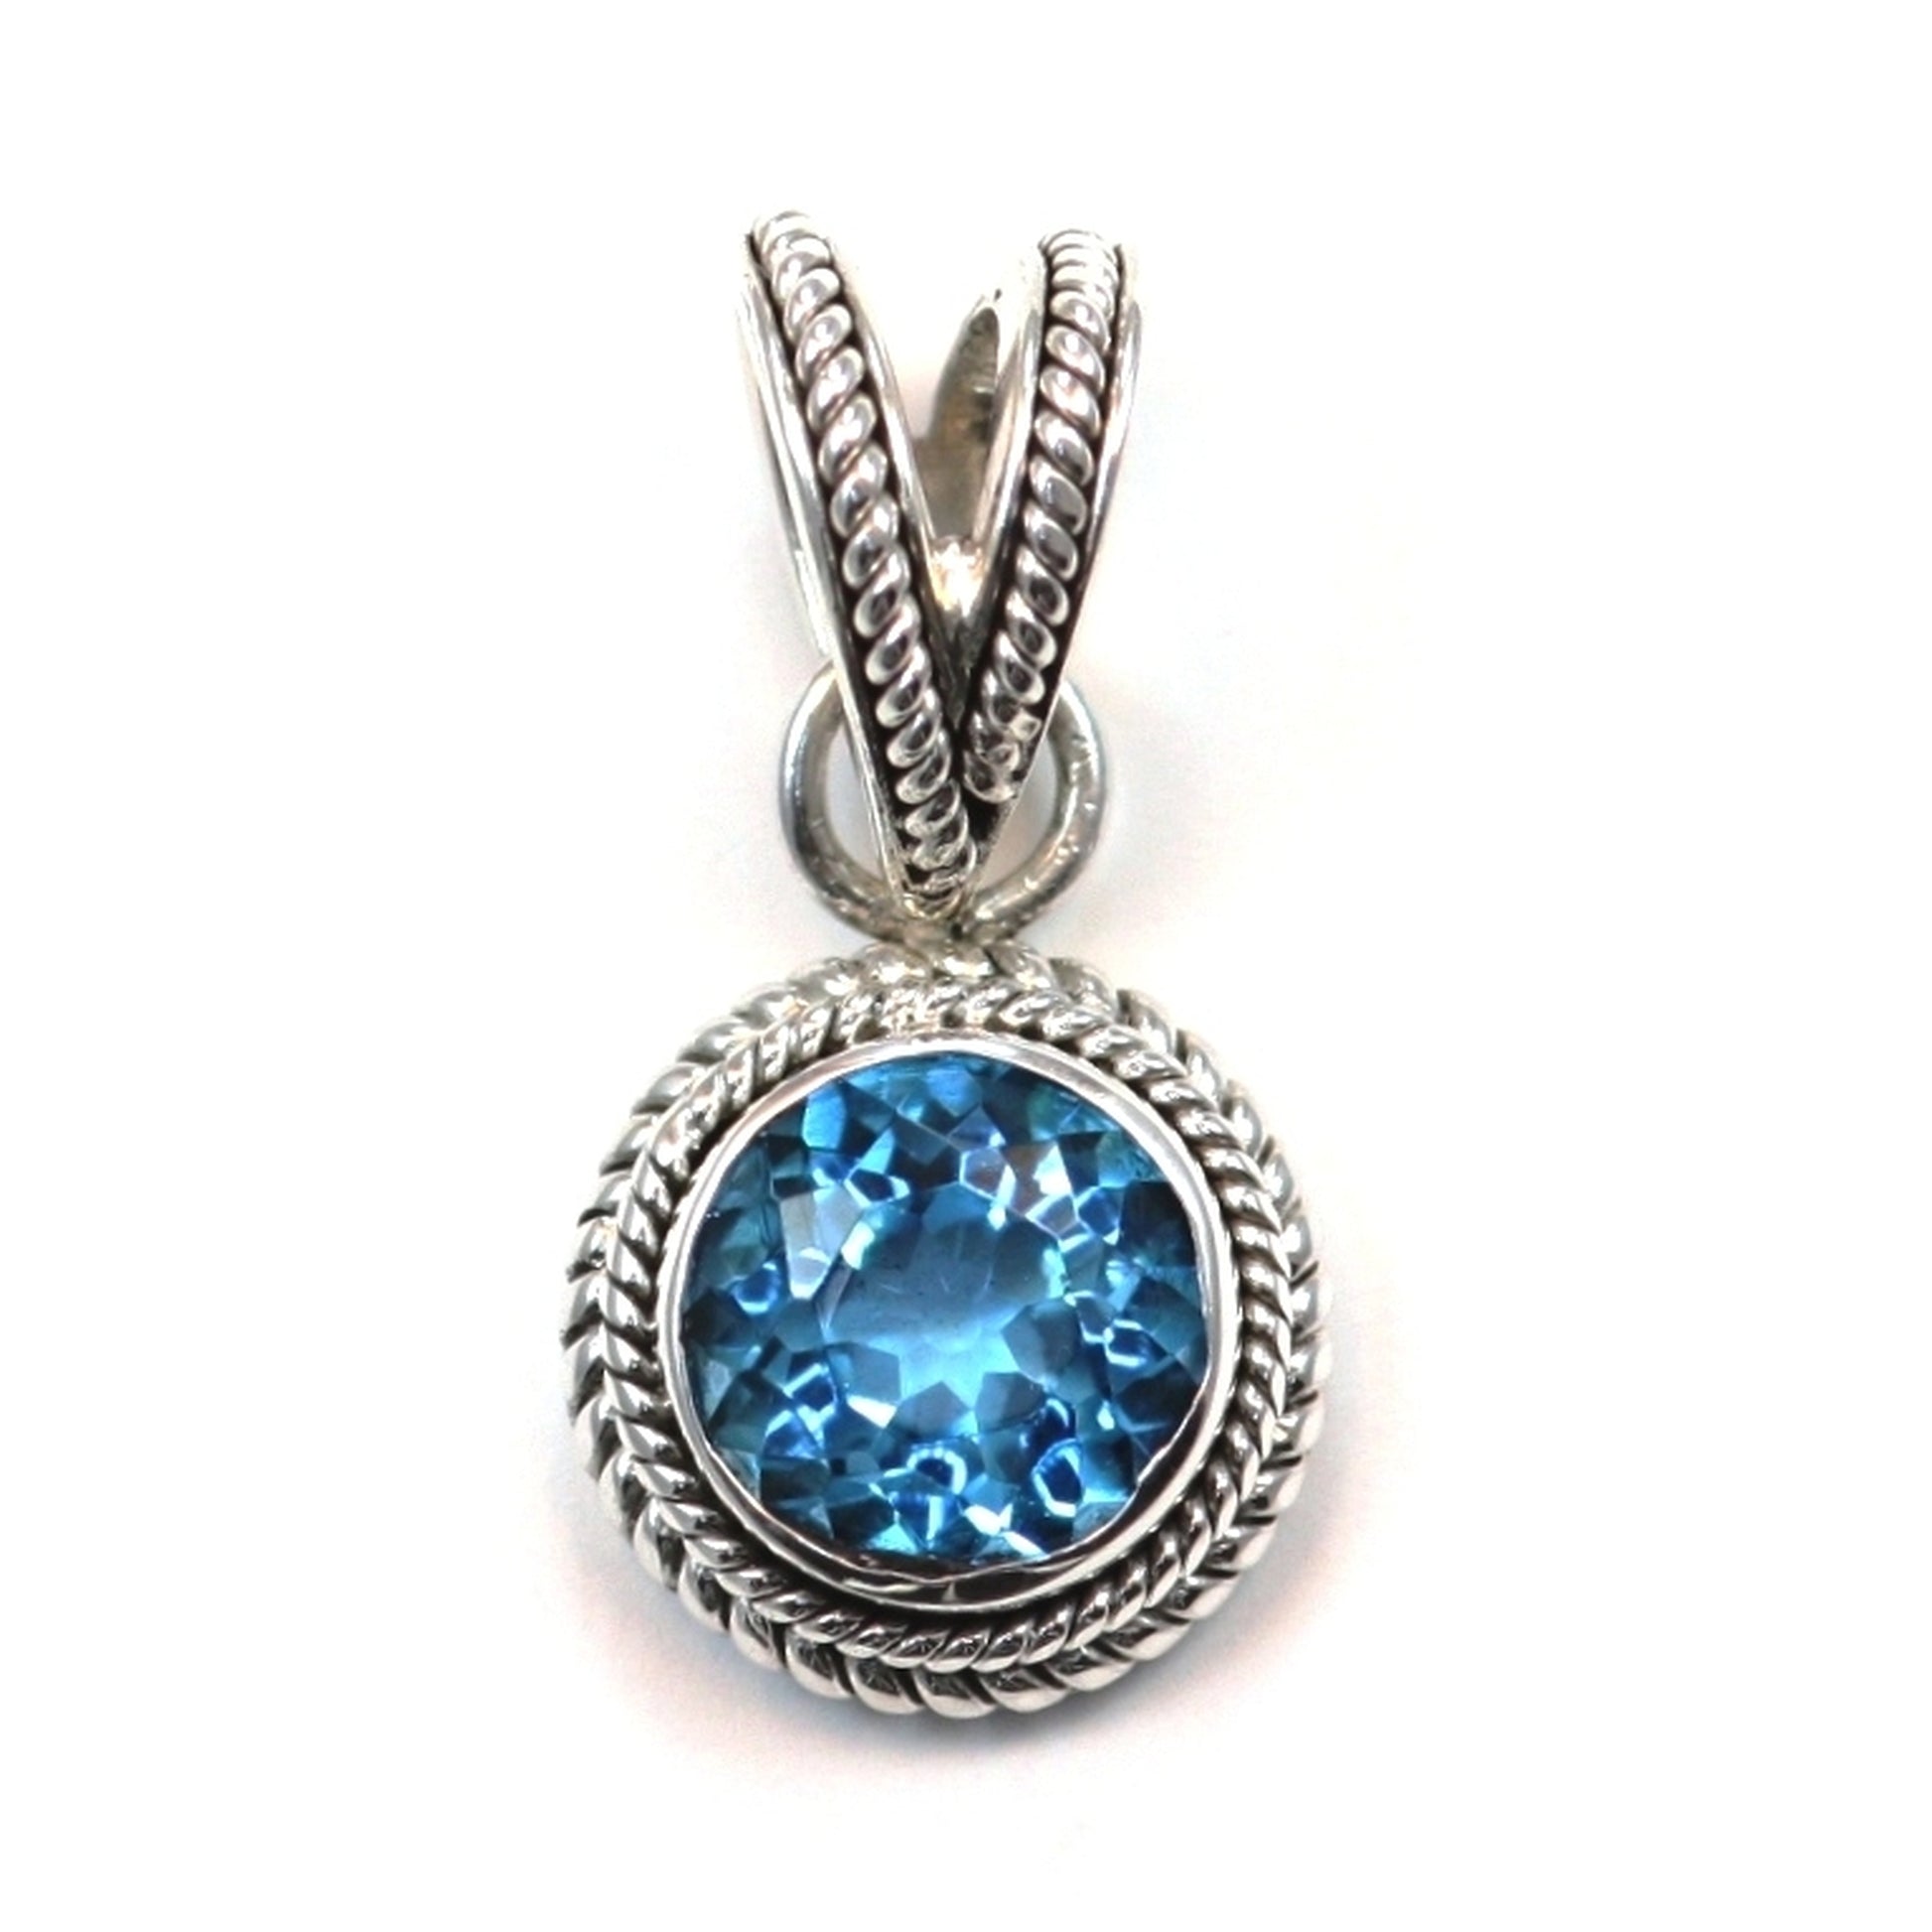 Silver pendant with round blue topaz gemstone.